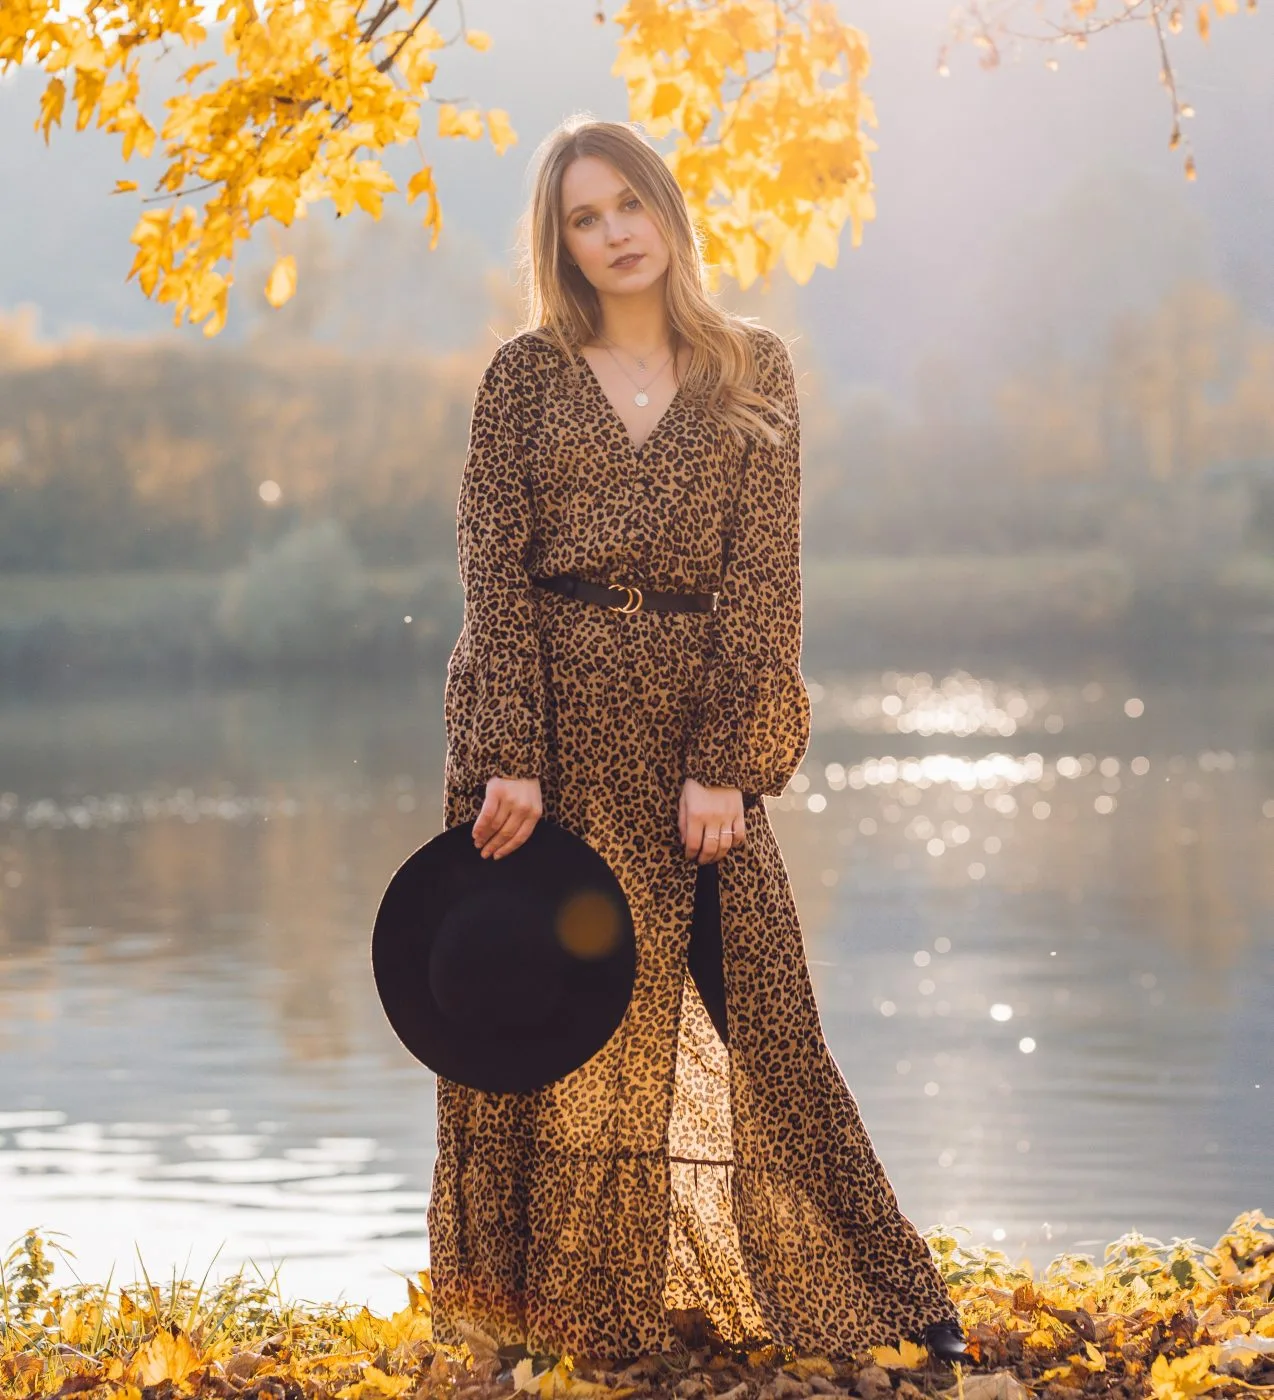 Boho Herbst Outfit Ideen - Herbst Outfits besten im Die Style Bohemian